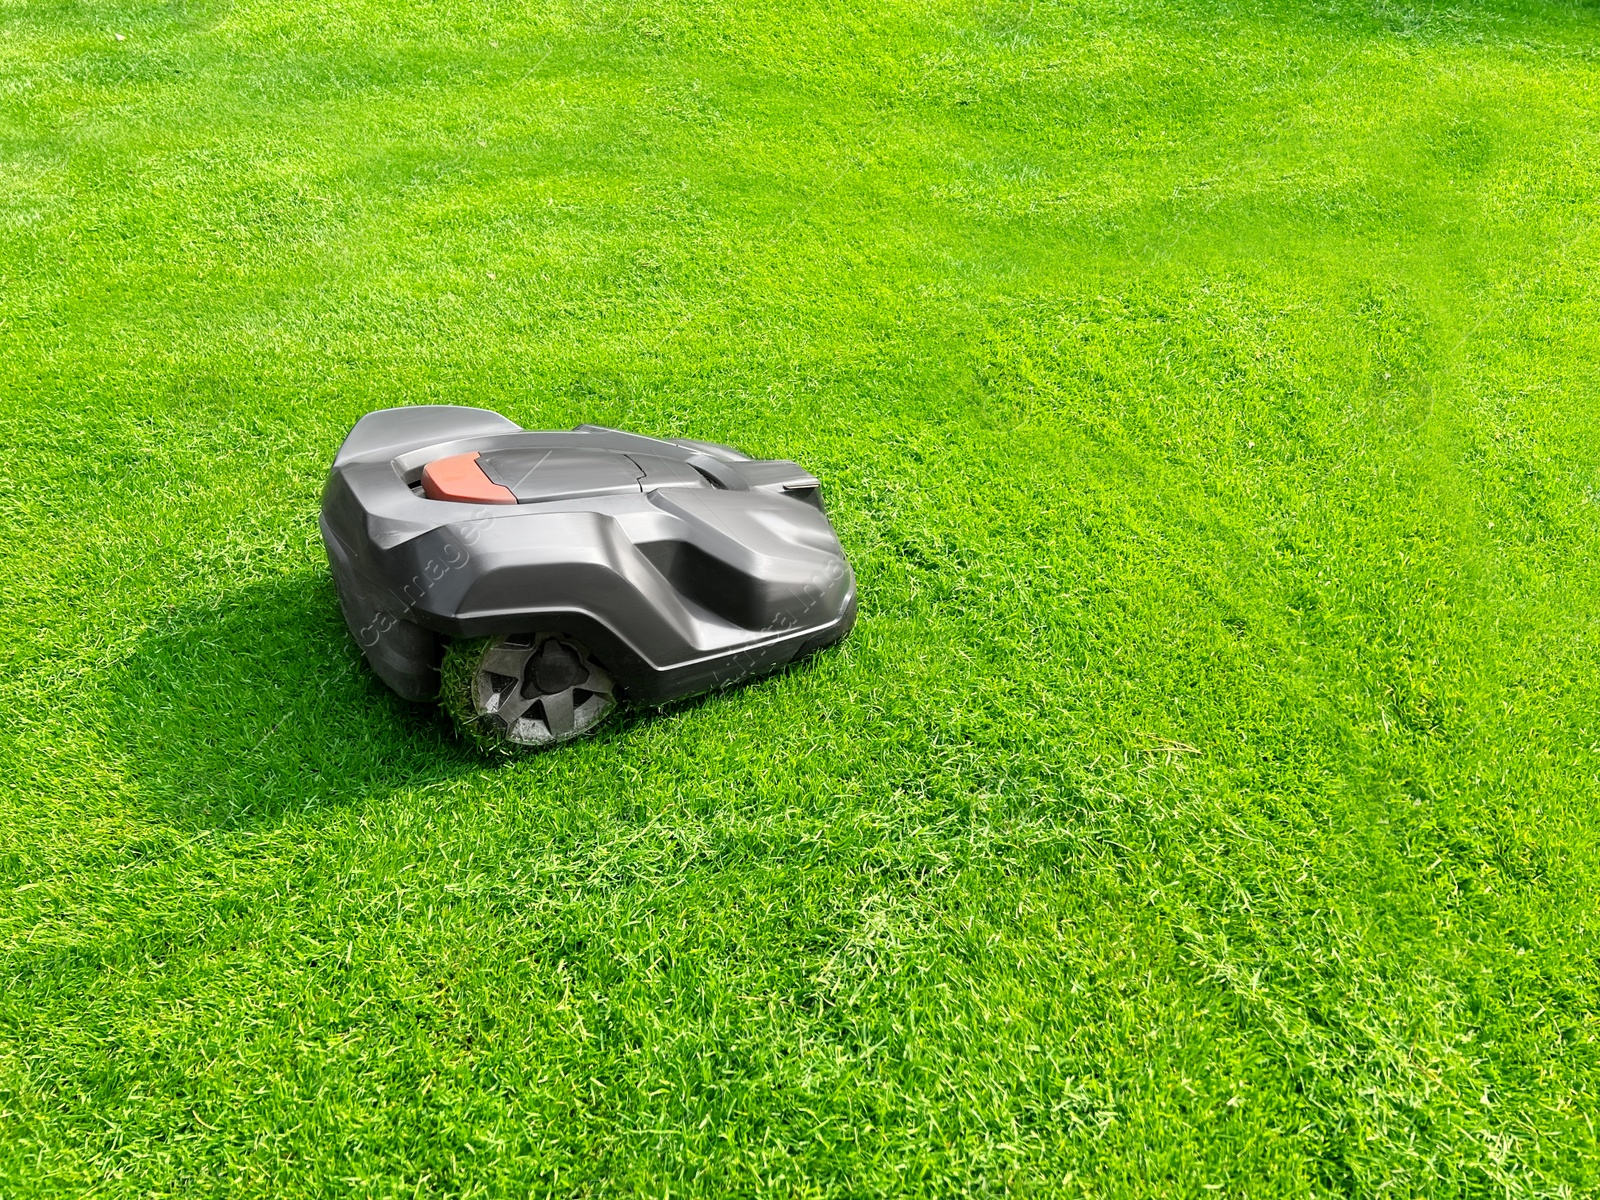 Photo of Modern robot lawn mower on green grass in garden